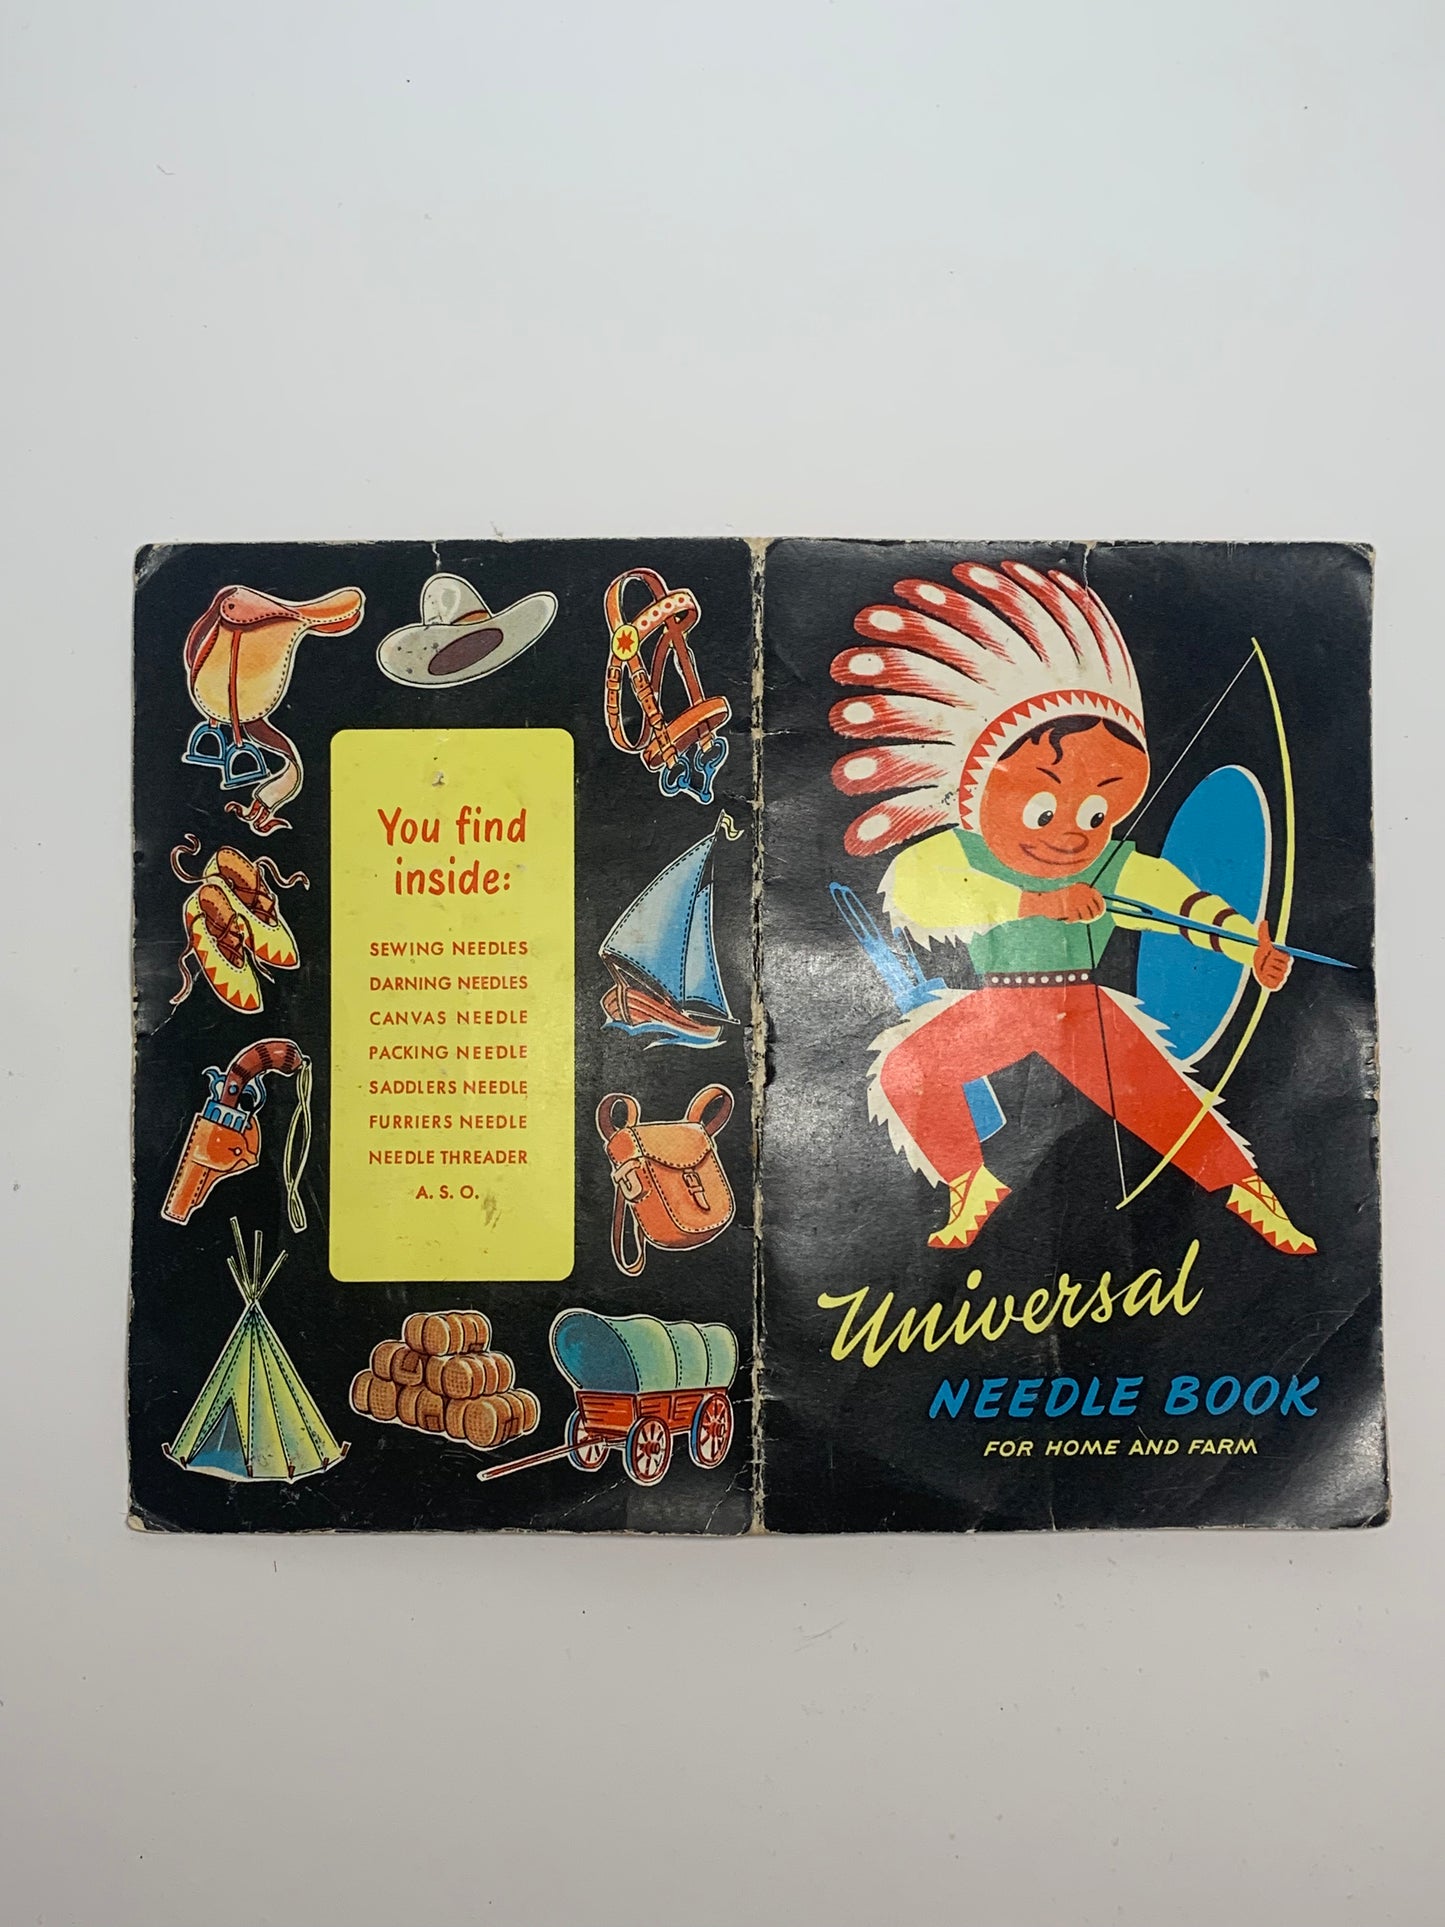 Vintage Universal Needle Book